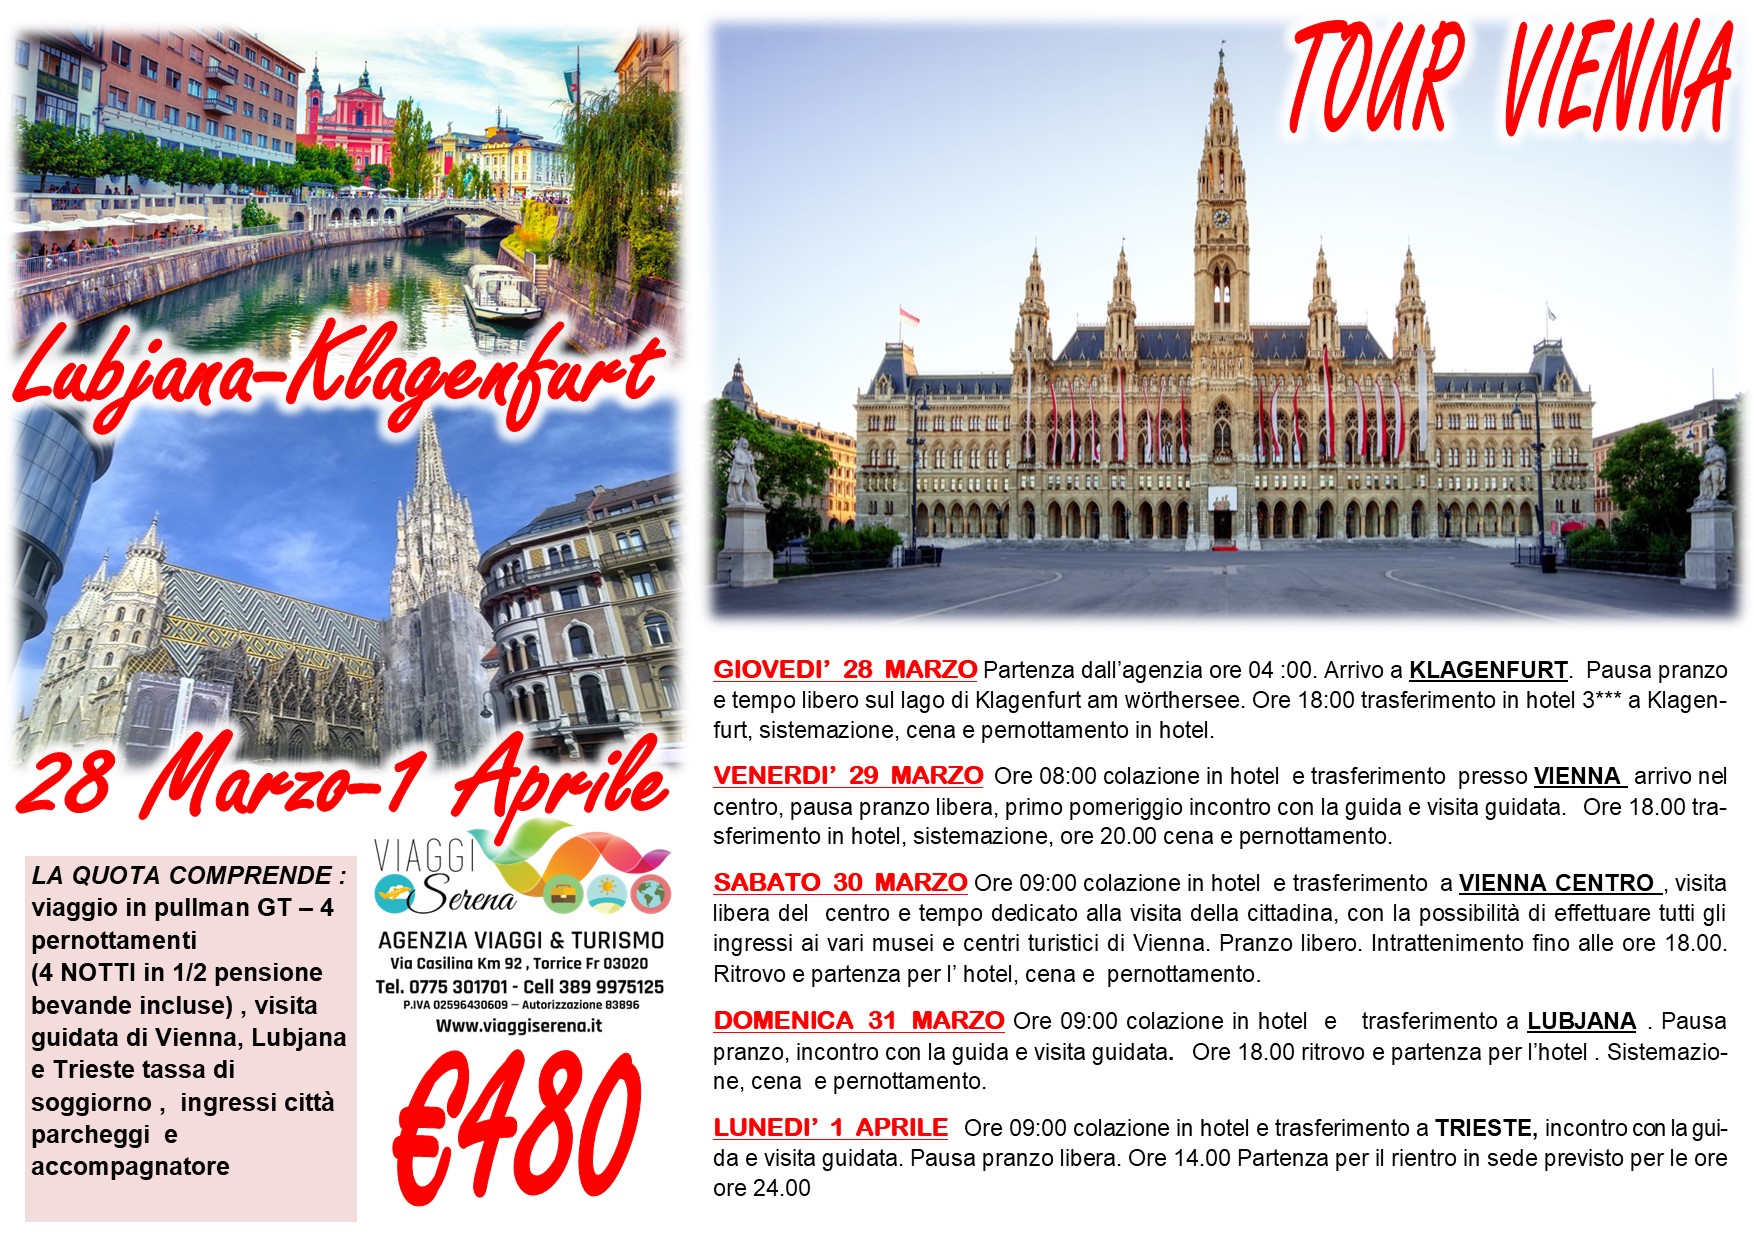 Viaggi di gruppo: Tour Vienna , Klagenfurt, Lubiana & Trieste 28 Marzo & 1 Aprile €480